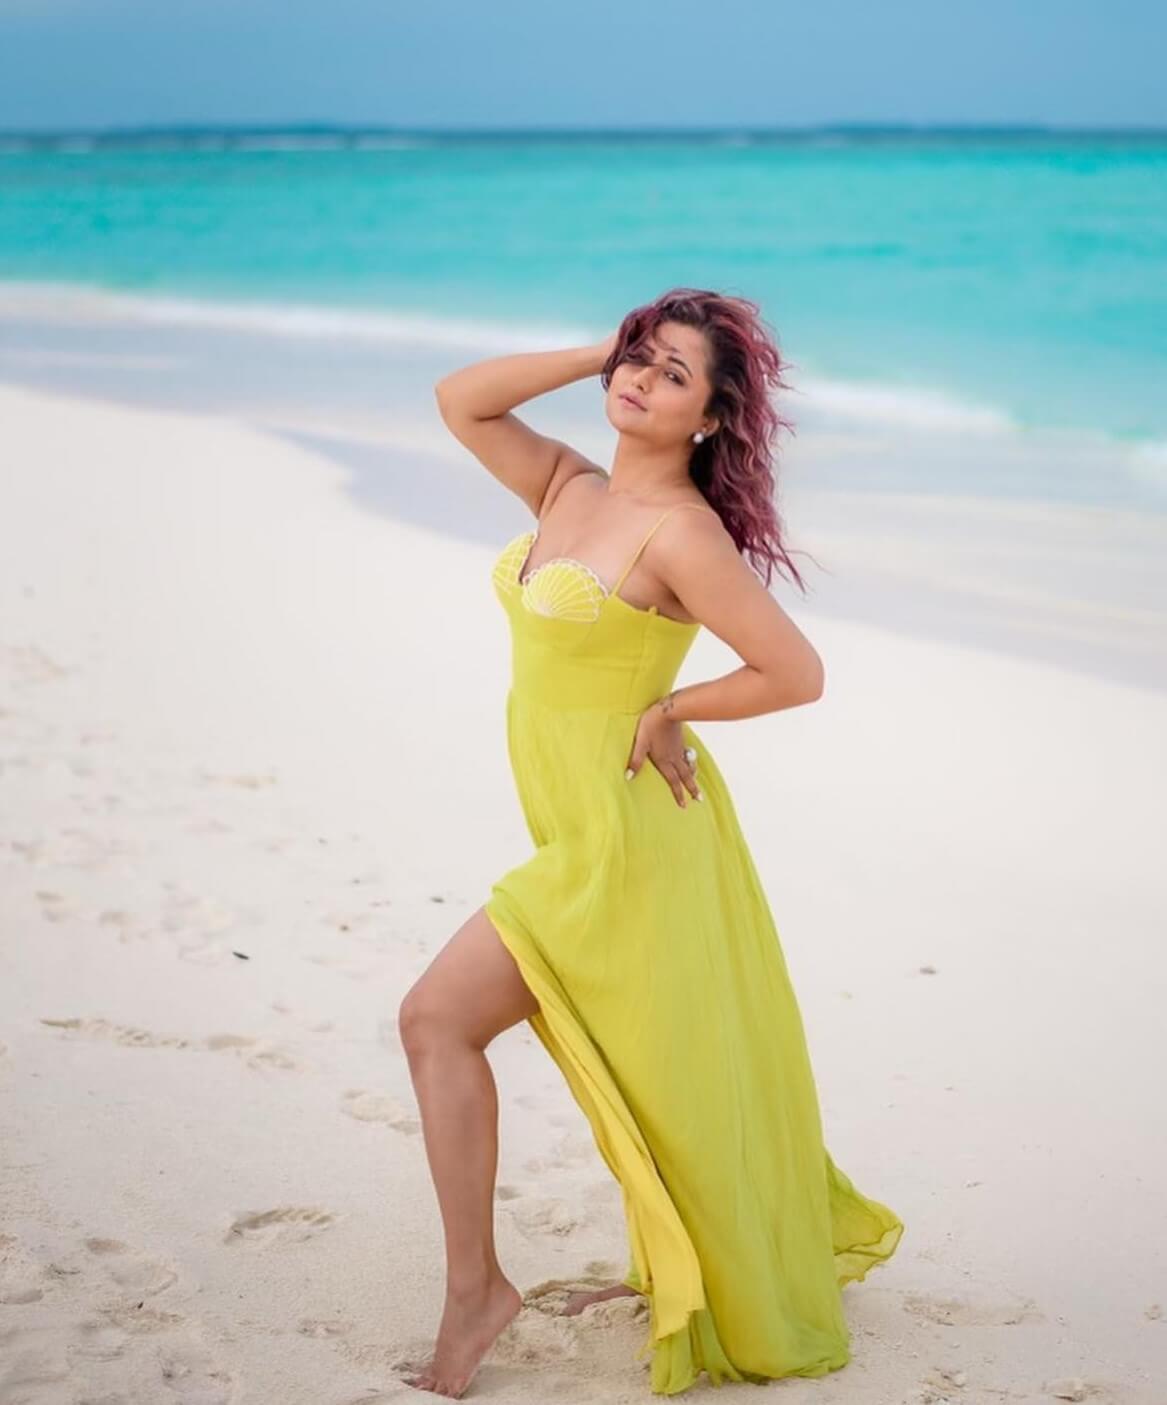 Rashami Desai Maldives Vacation Look In Yellow Noddle Strap Dress With Slit Cut